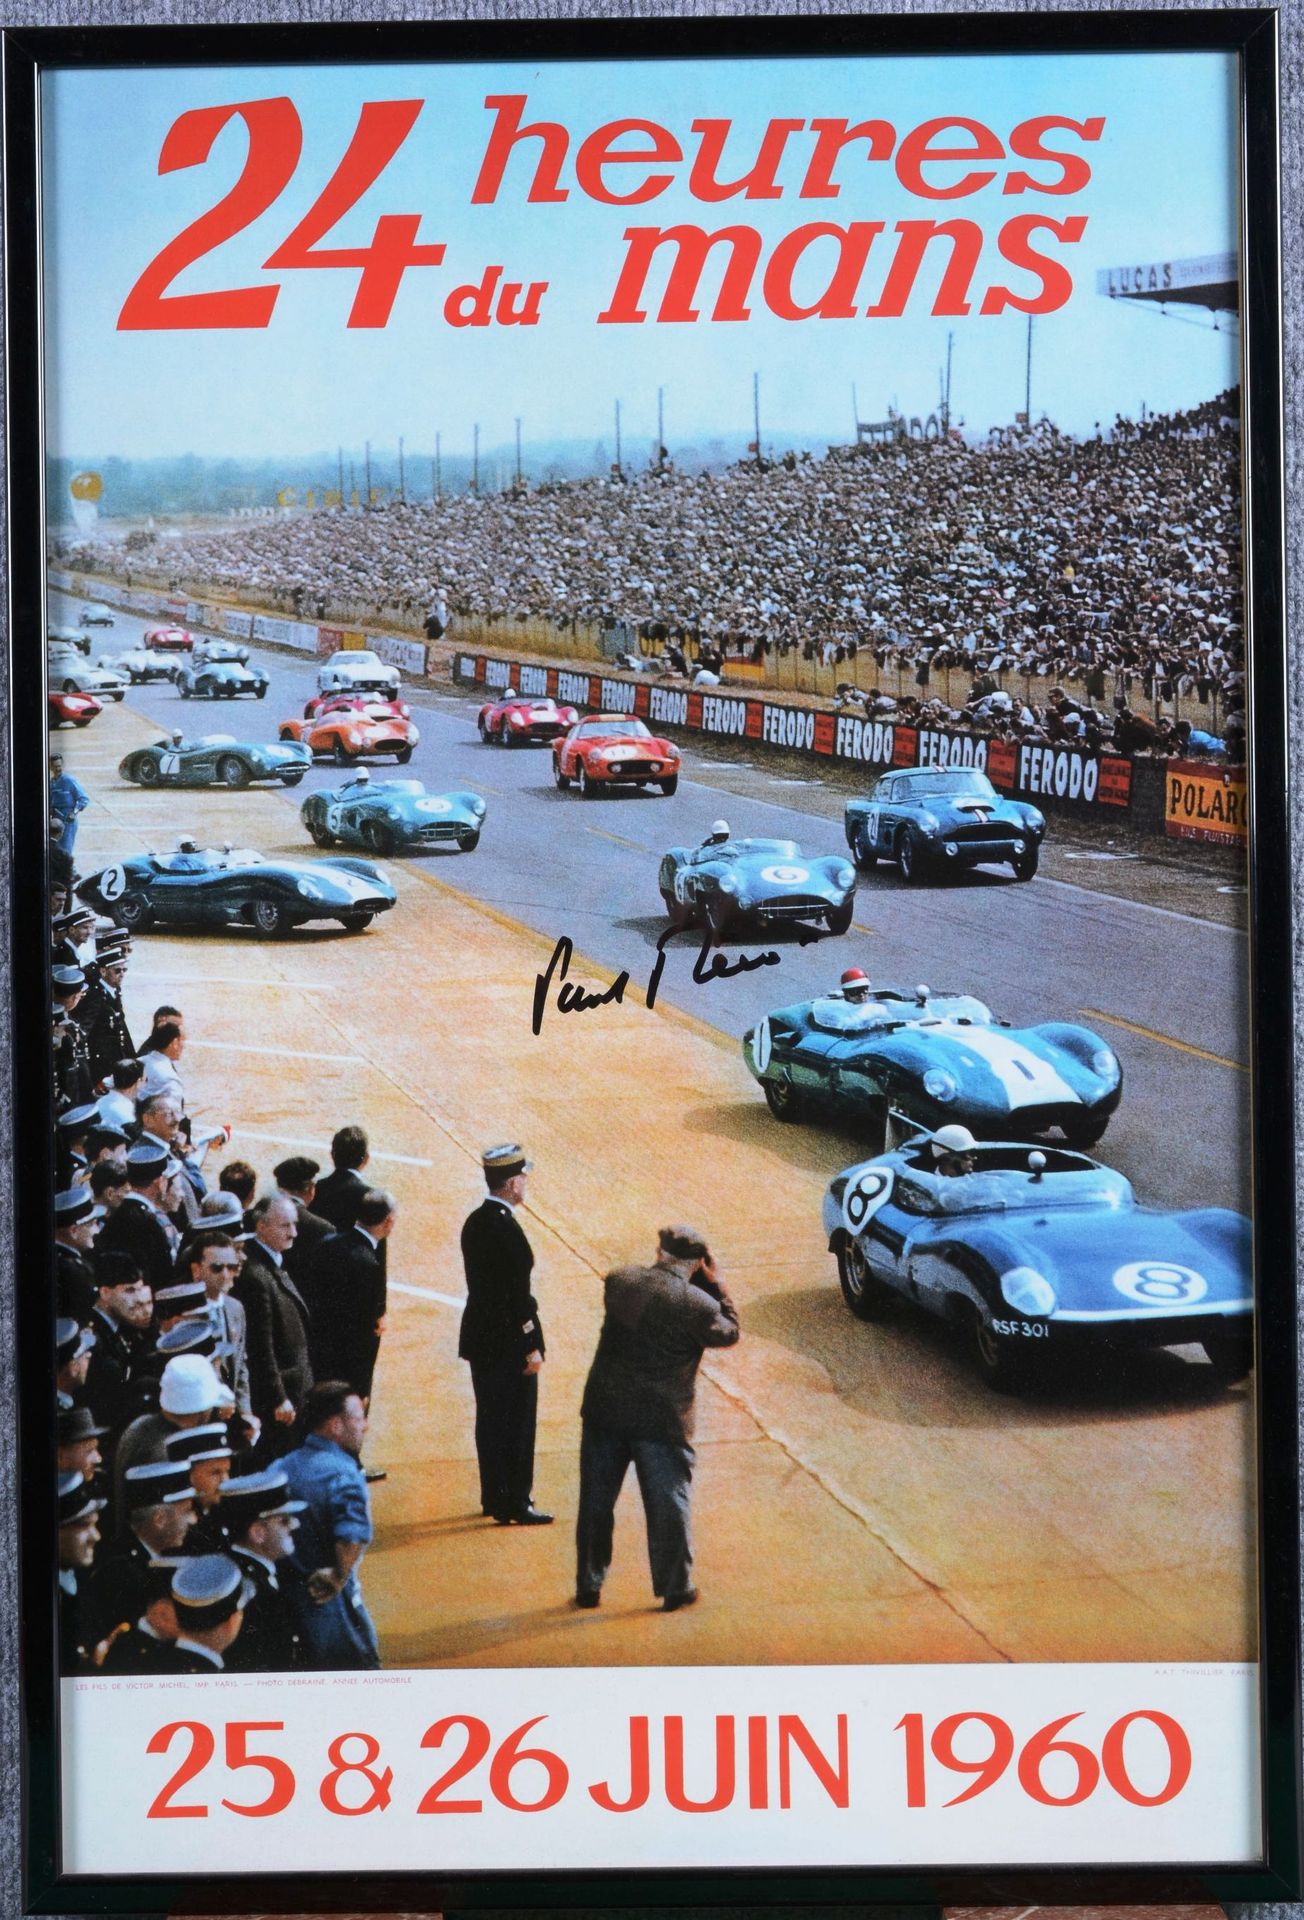 Paul FRERE Paul FRERE

1960年勒芒24小时耐力赛的海报（再版），再现了1959年比赛开始时的照片，由1960年的冠军Paul Frèr&hellip;